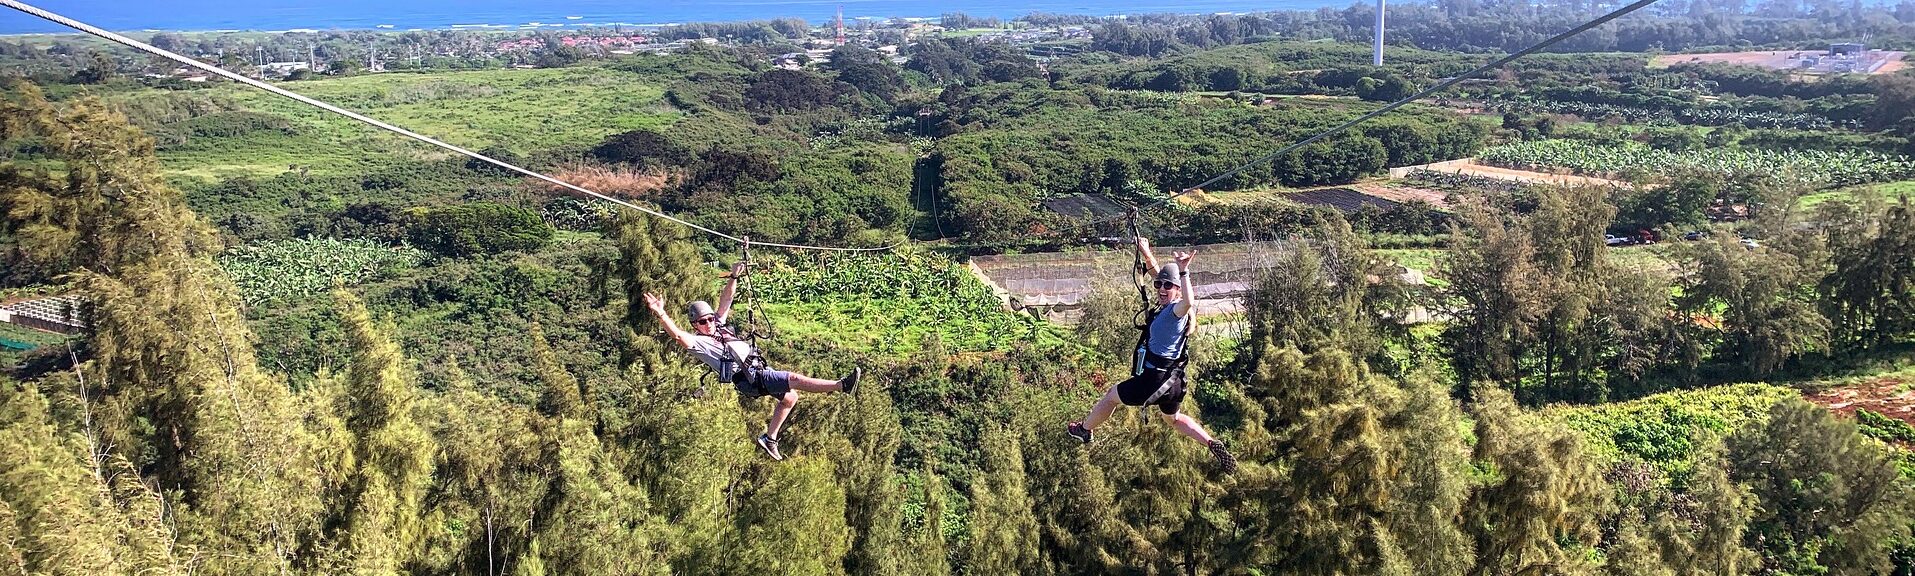 Summer fun on Oahu includes amazing ziplines like this.